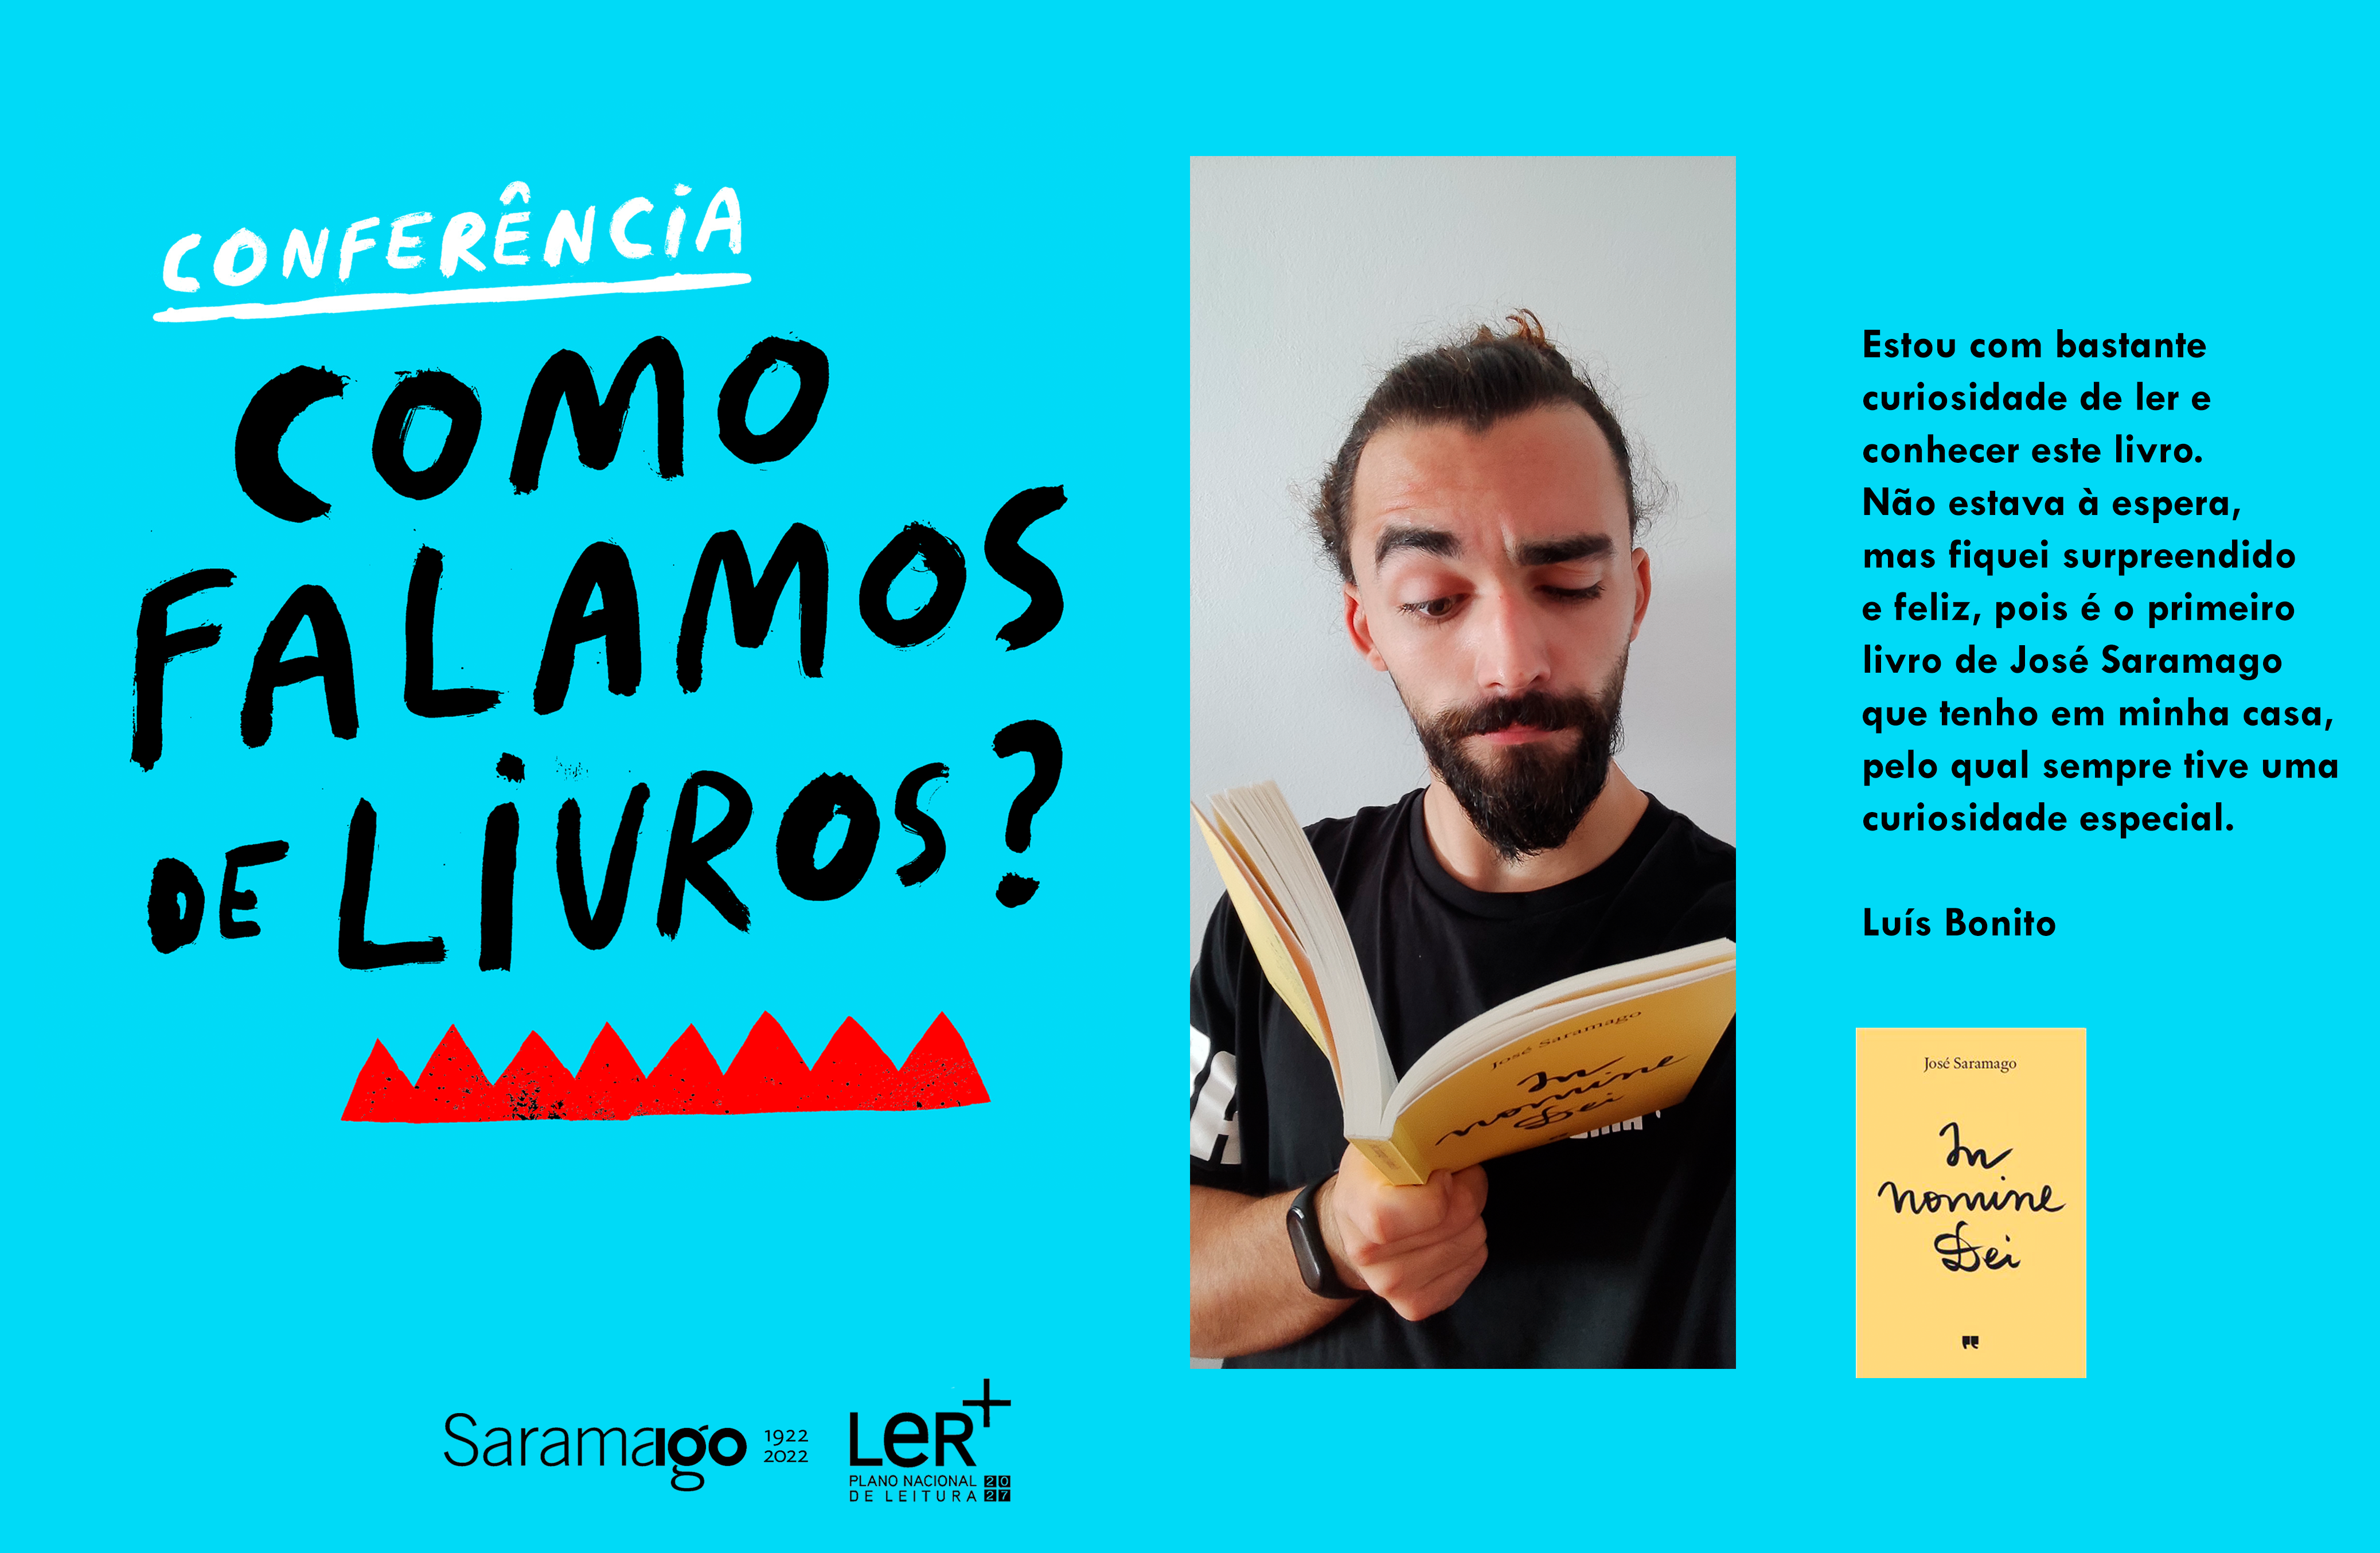 Ler_Saramago_Luis_Bonito